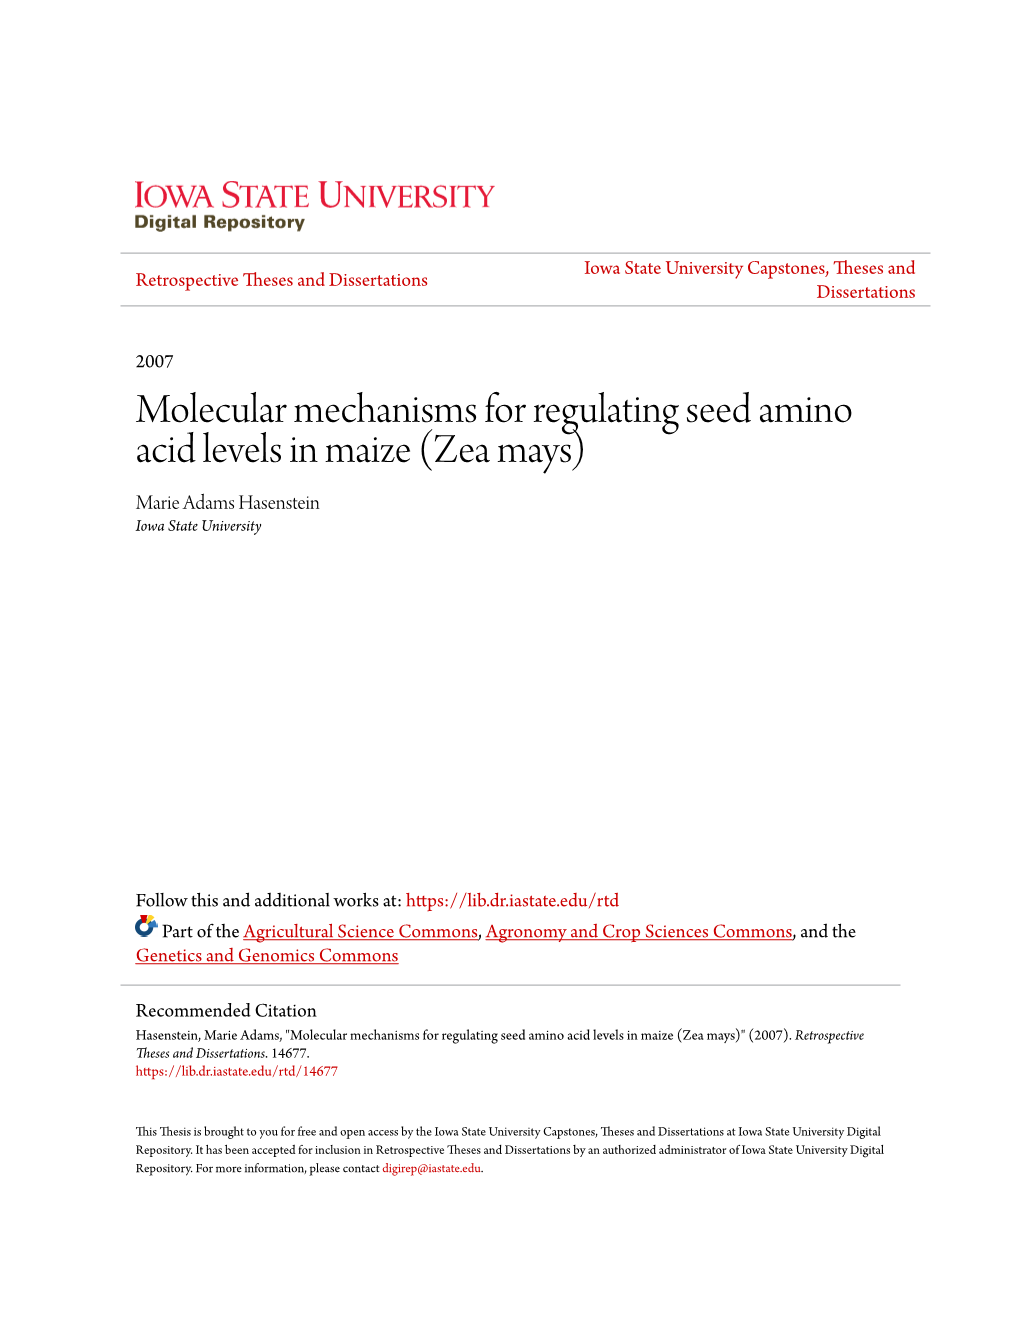 Molecular Mechanisms for Regulating Seed Amino Acid Levels in Maize (Zea Mays) Marie Adams Hasenstein Iowa State University